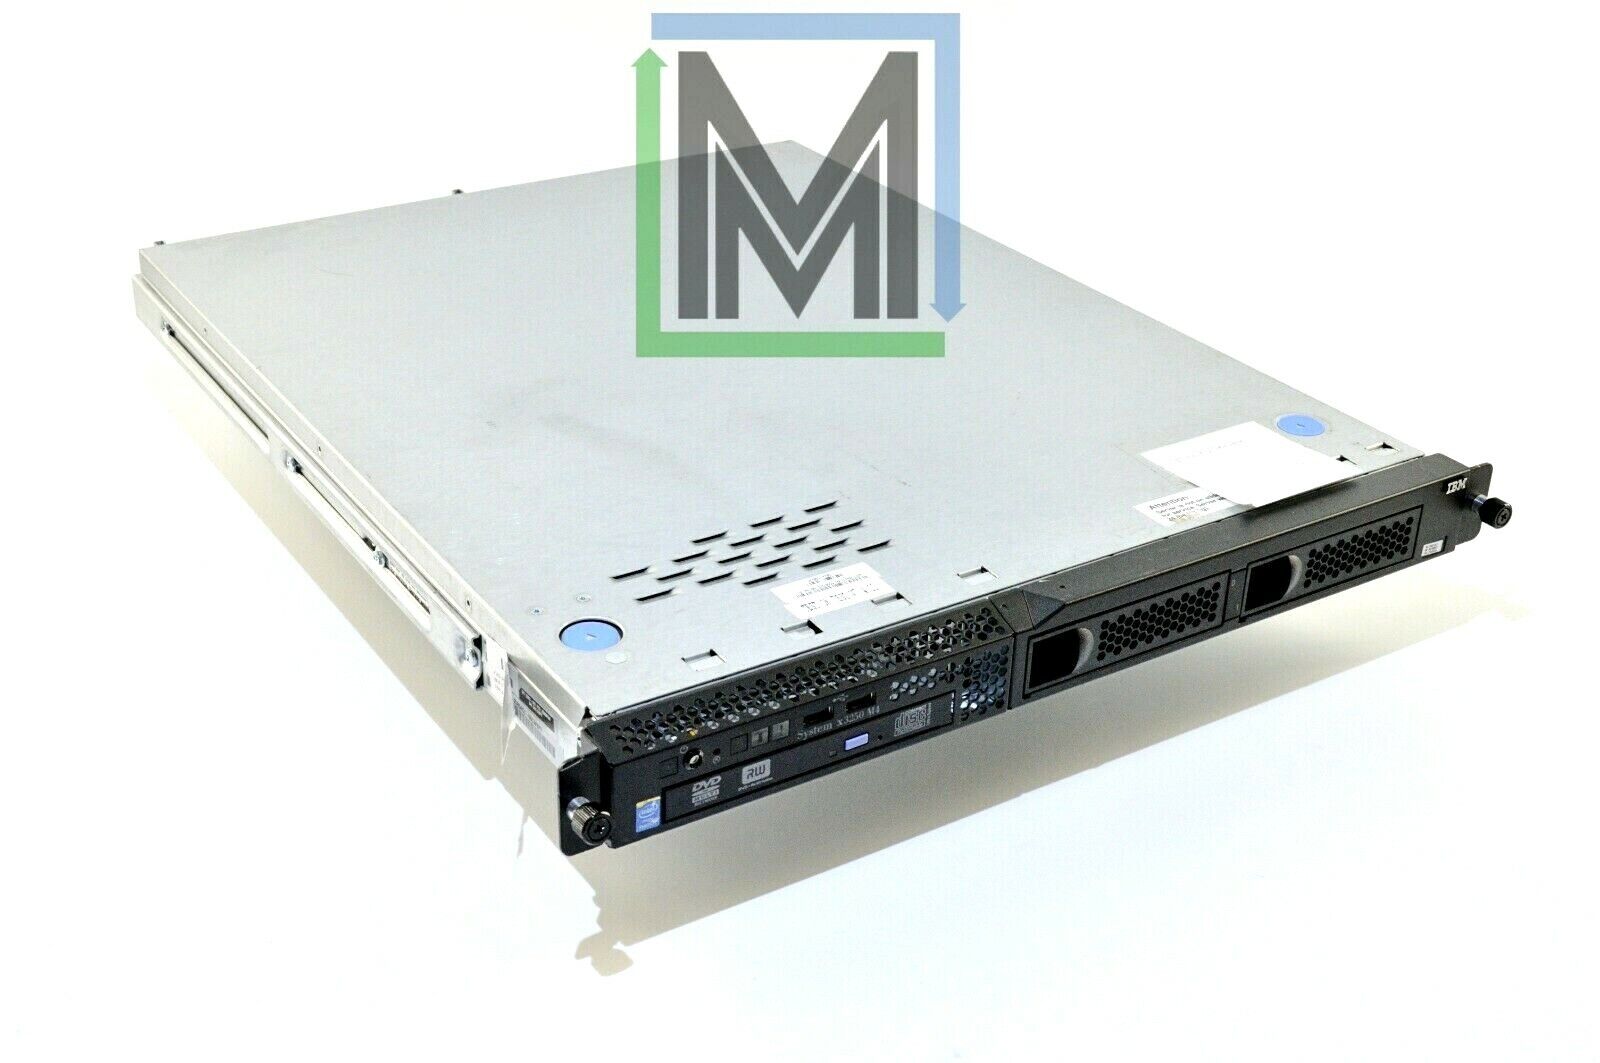 IBM 2583-AC1 x3250 M4 Server TS3000 System Console v7.4.12